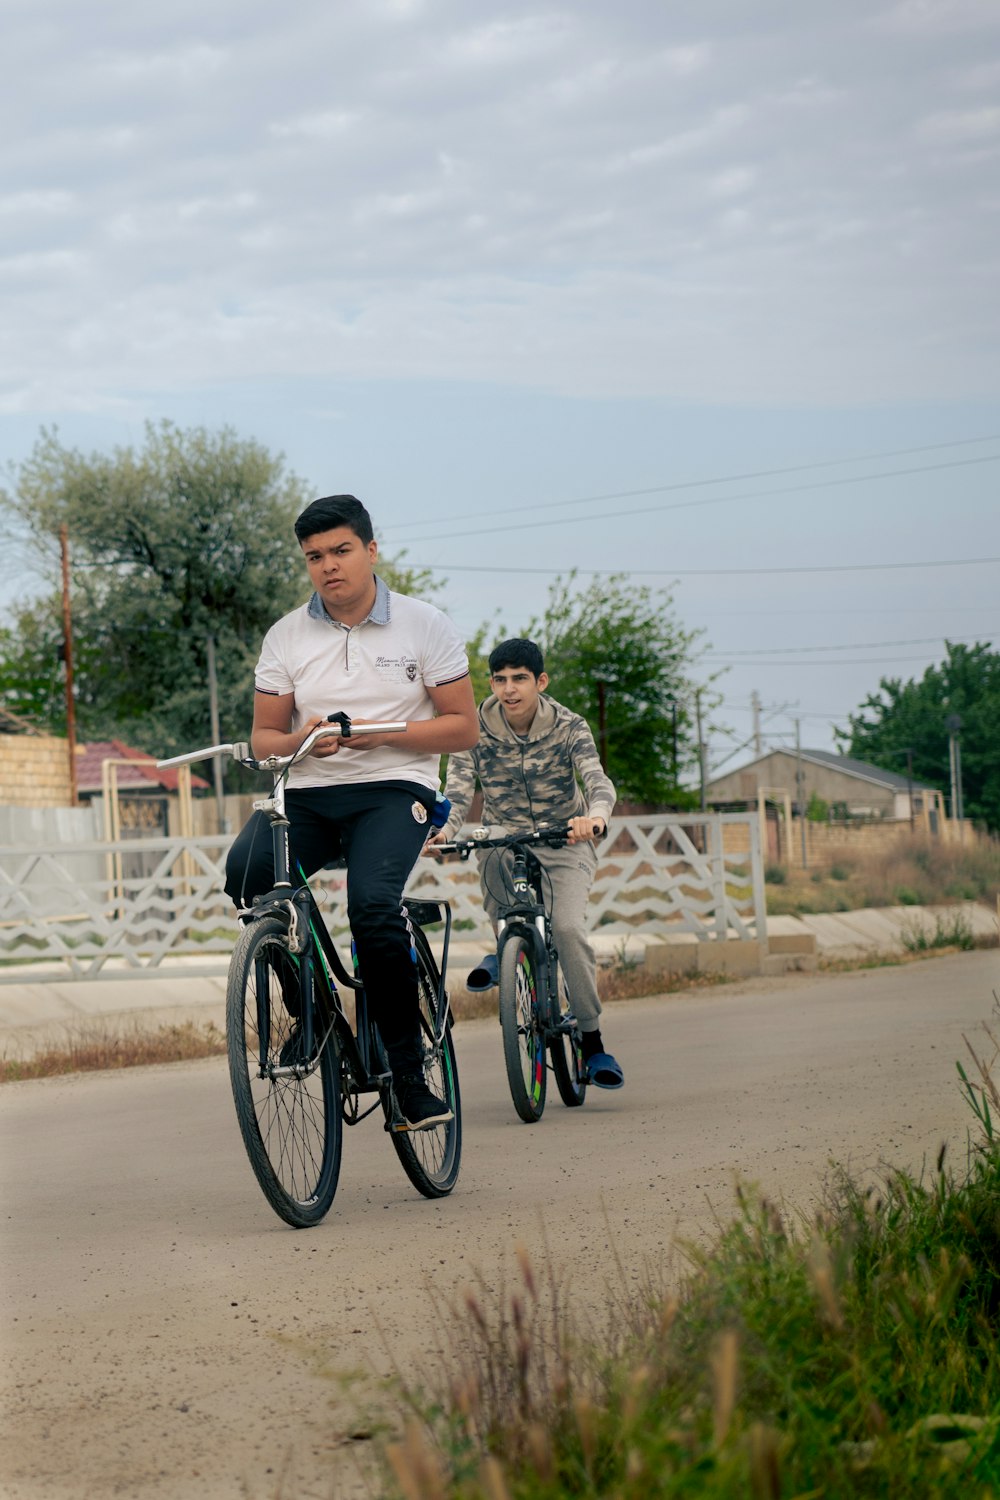 a man riding a bike next to a boy on a cell phone